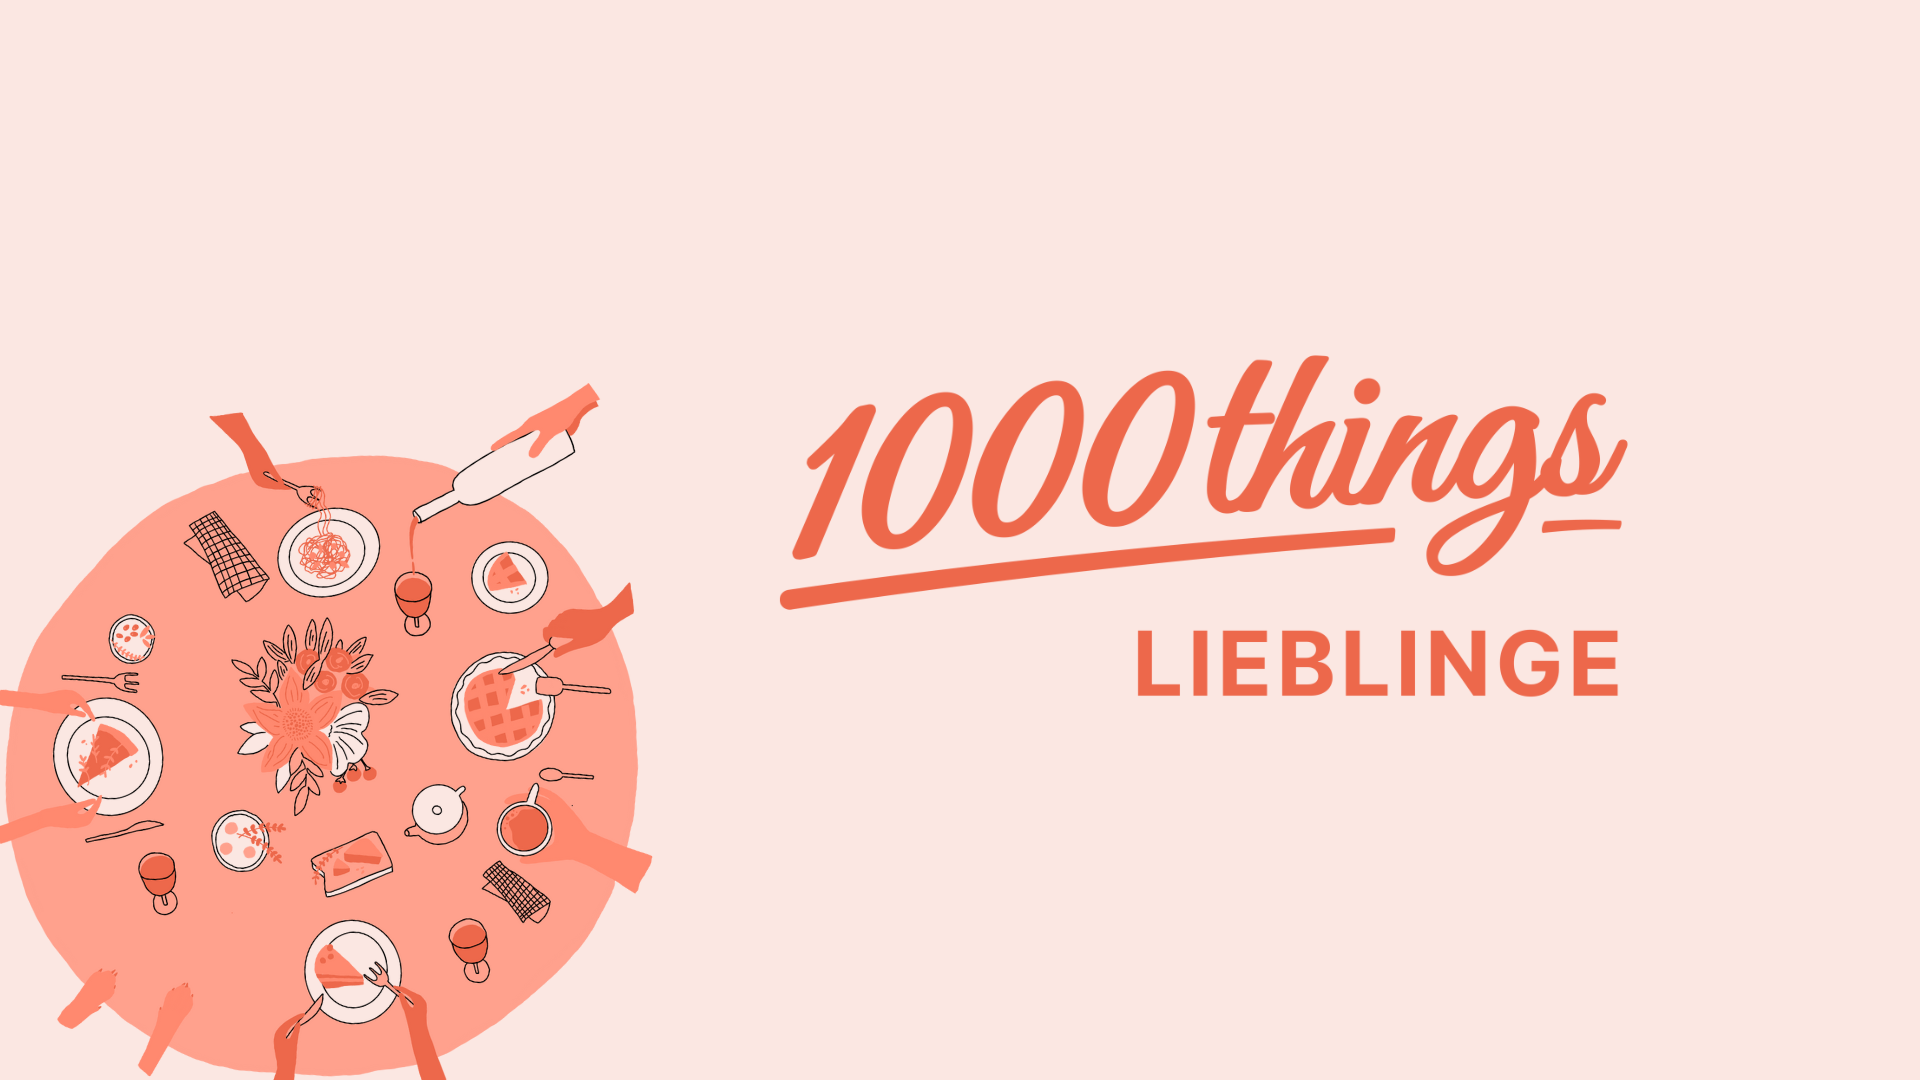 1000things Lieblinge Grafik